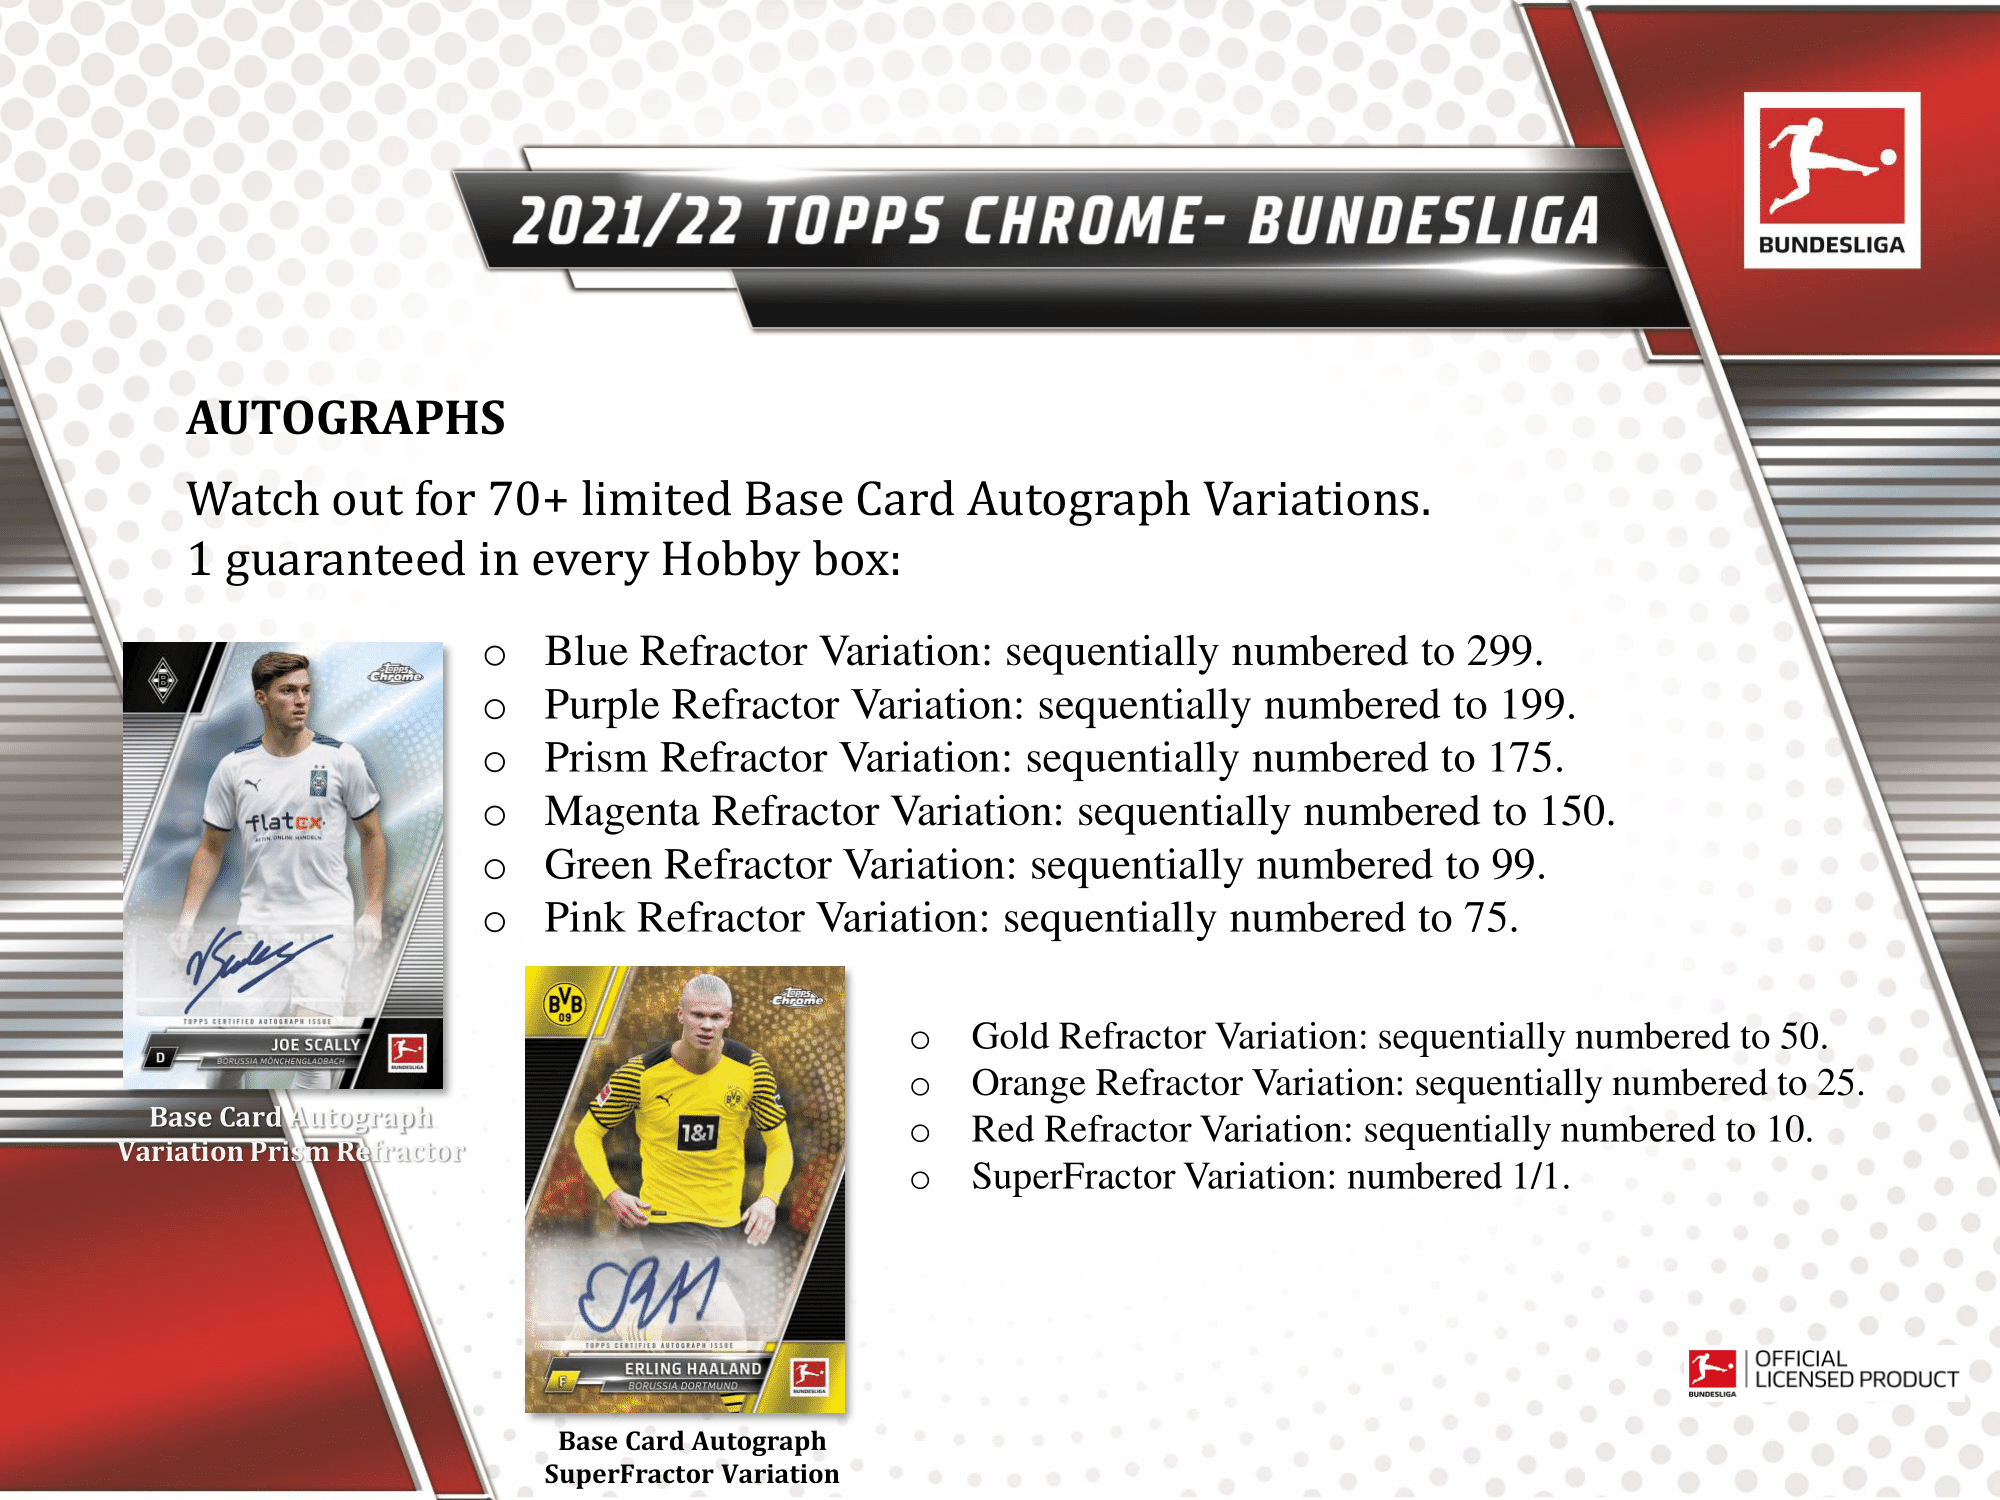 Topps - 2021/22 Chrome Bundesliga Football (Soccer) - Hobby Box - The Card Vault